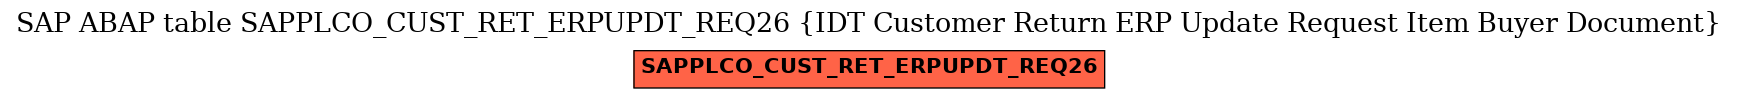 E-R Diagram for table SAPPLCO_CUST_RET_ERPUPDT_REQ26 (IDT Customer Return ERP Update Request Item Buyer Document)